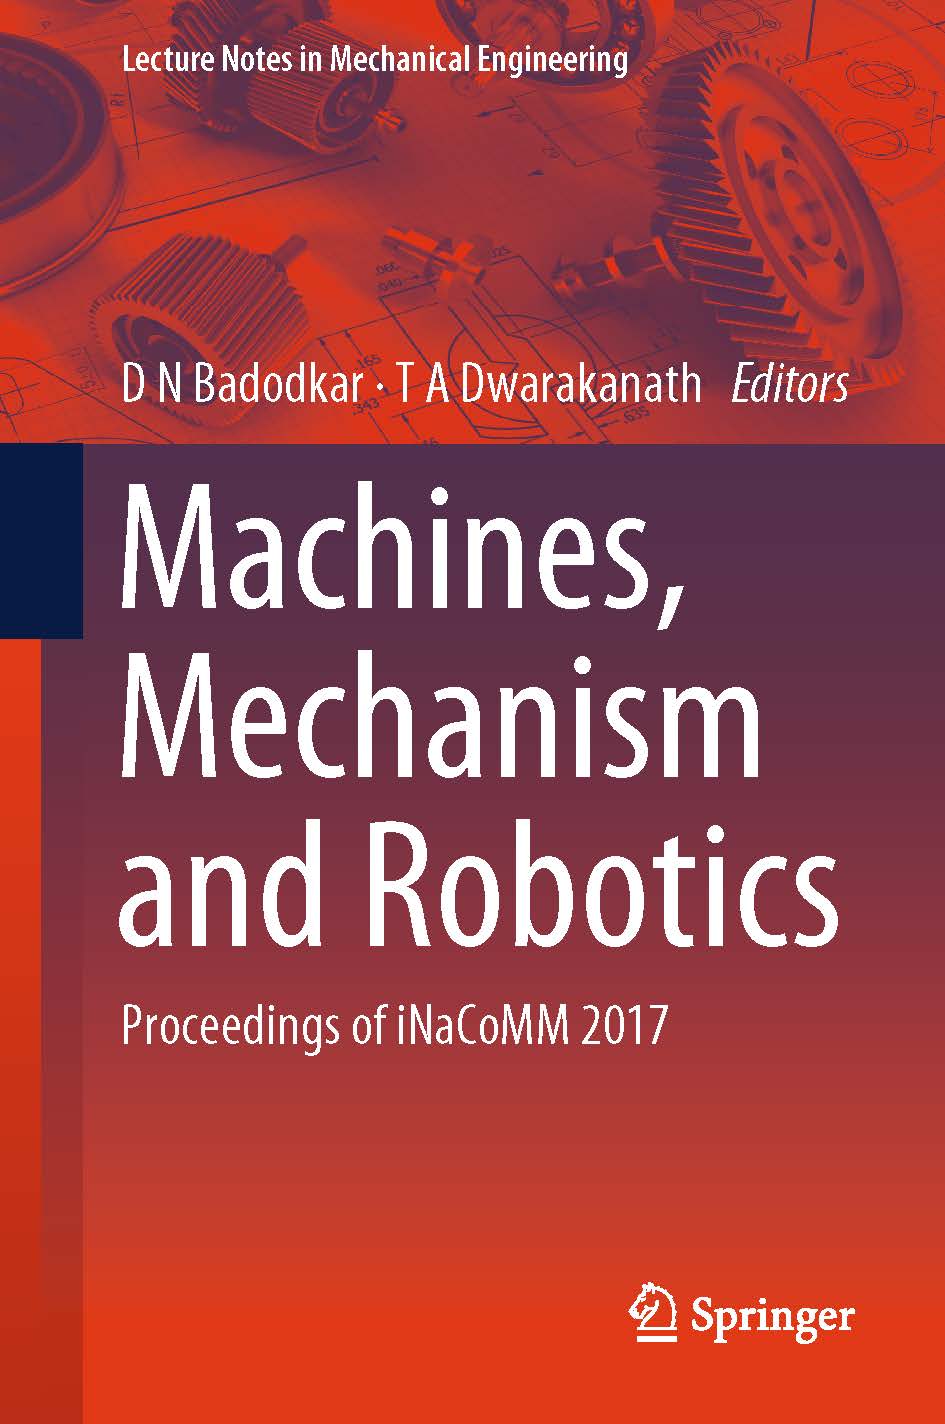 页面提取自－2019_Book_Machines, Mechanism and Robotics.jpg